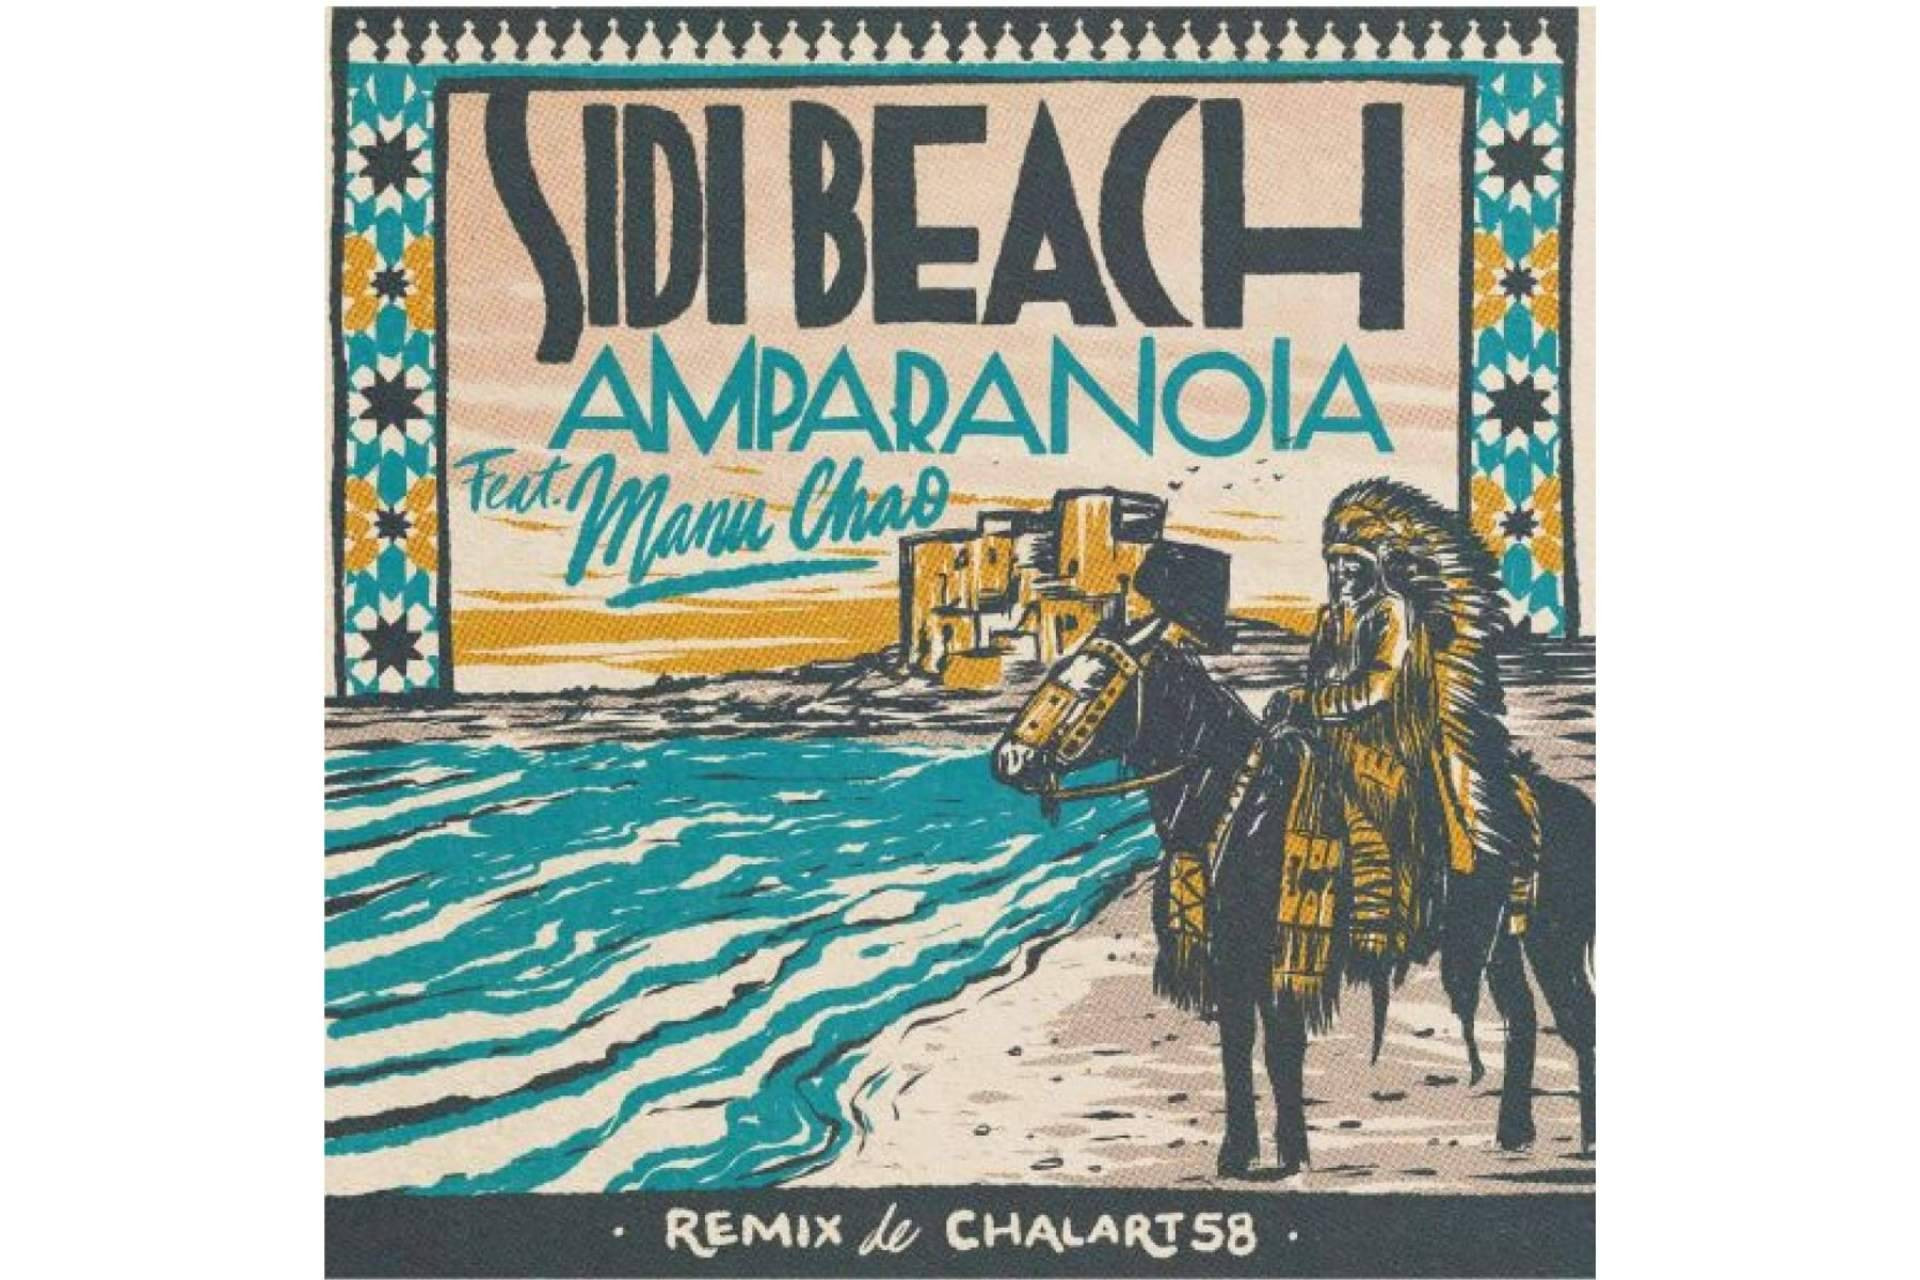  Sidi beach, Amparanoia y Manu Chao lanzan el remix de Charlat58 